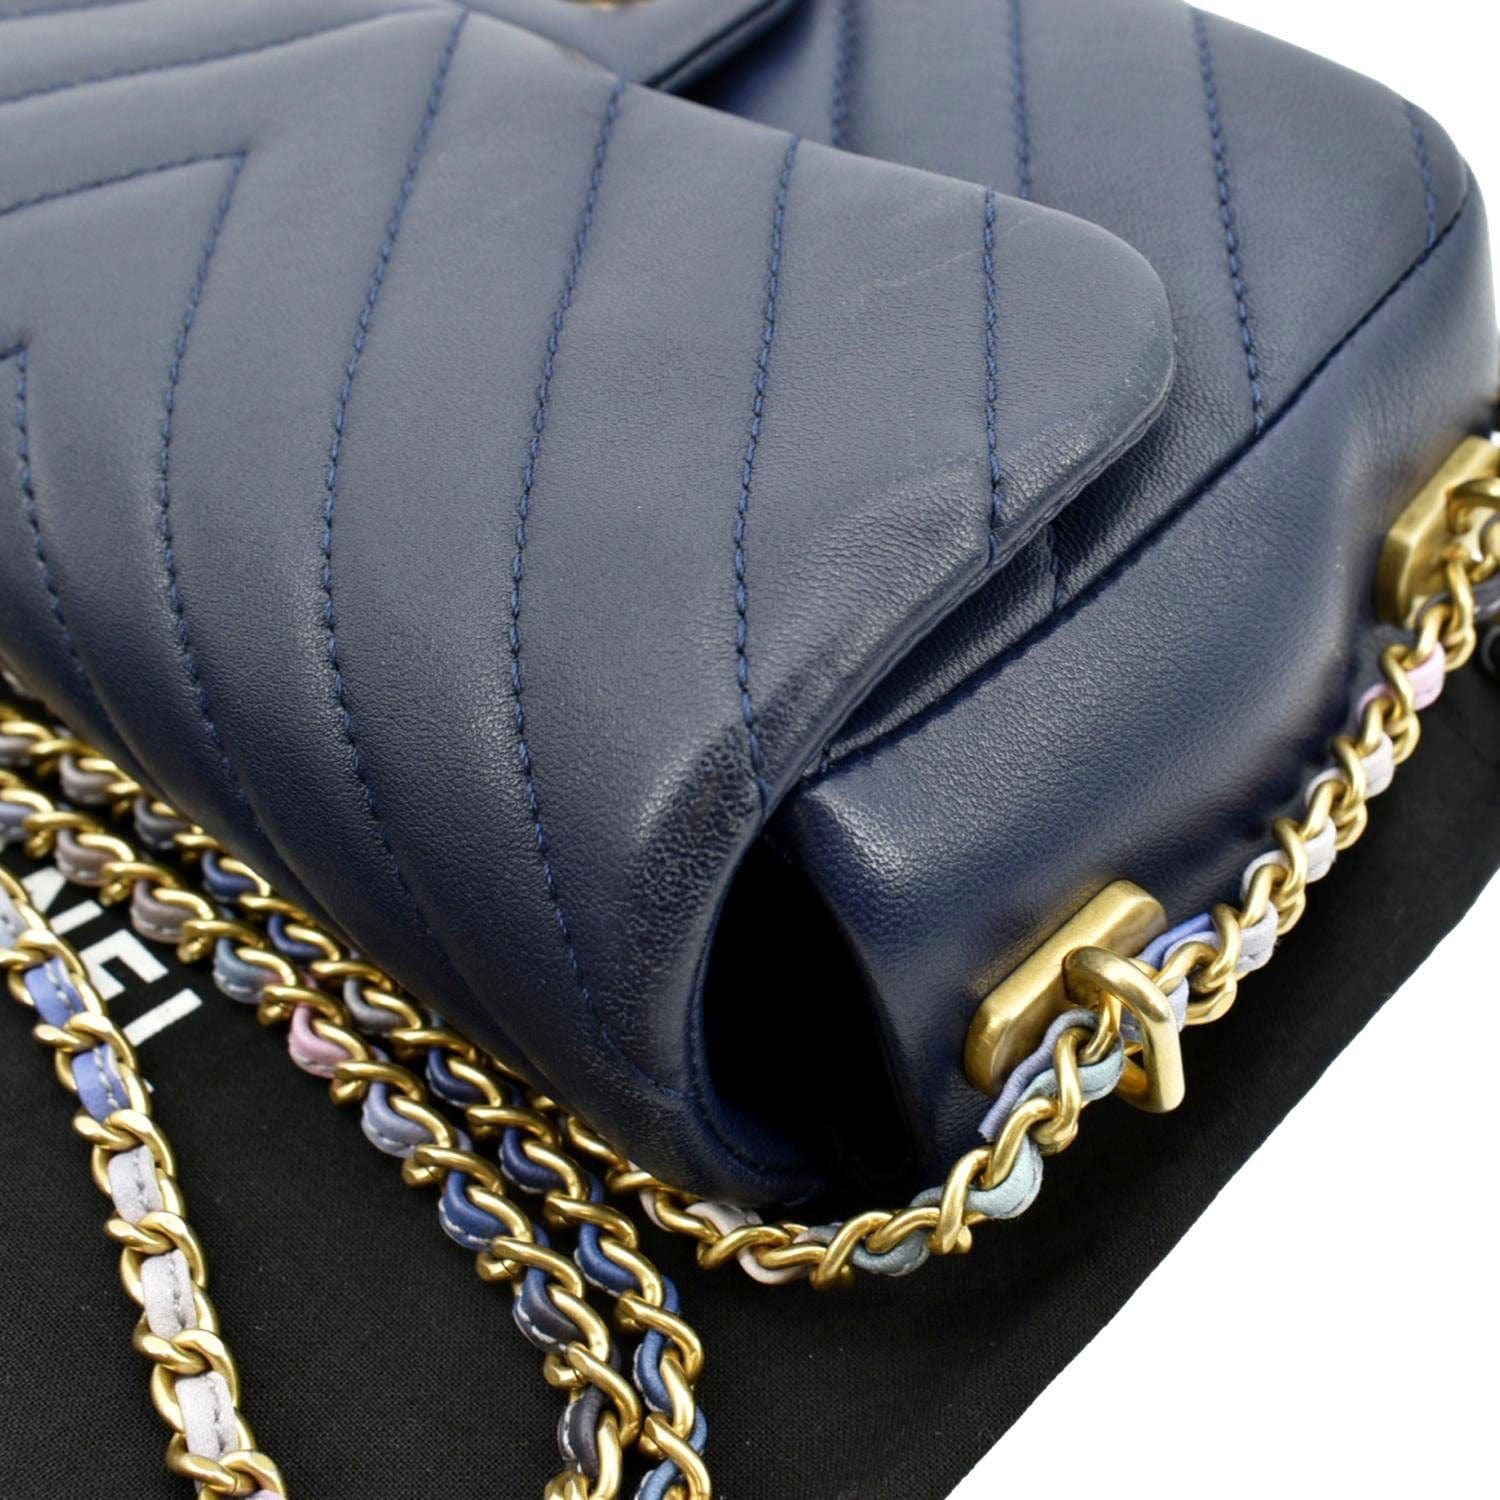 Chanel Mini Rectangular Flap Chevron Leather Crossbody Bag Navy Blue